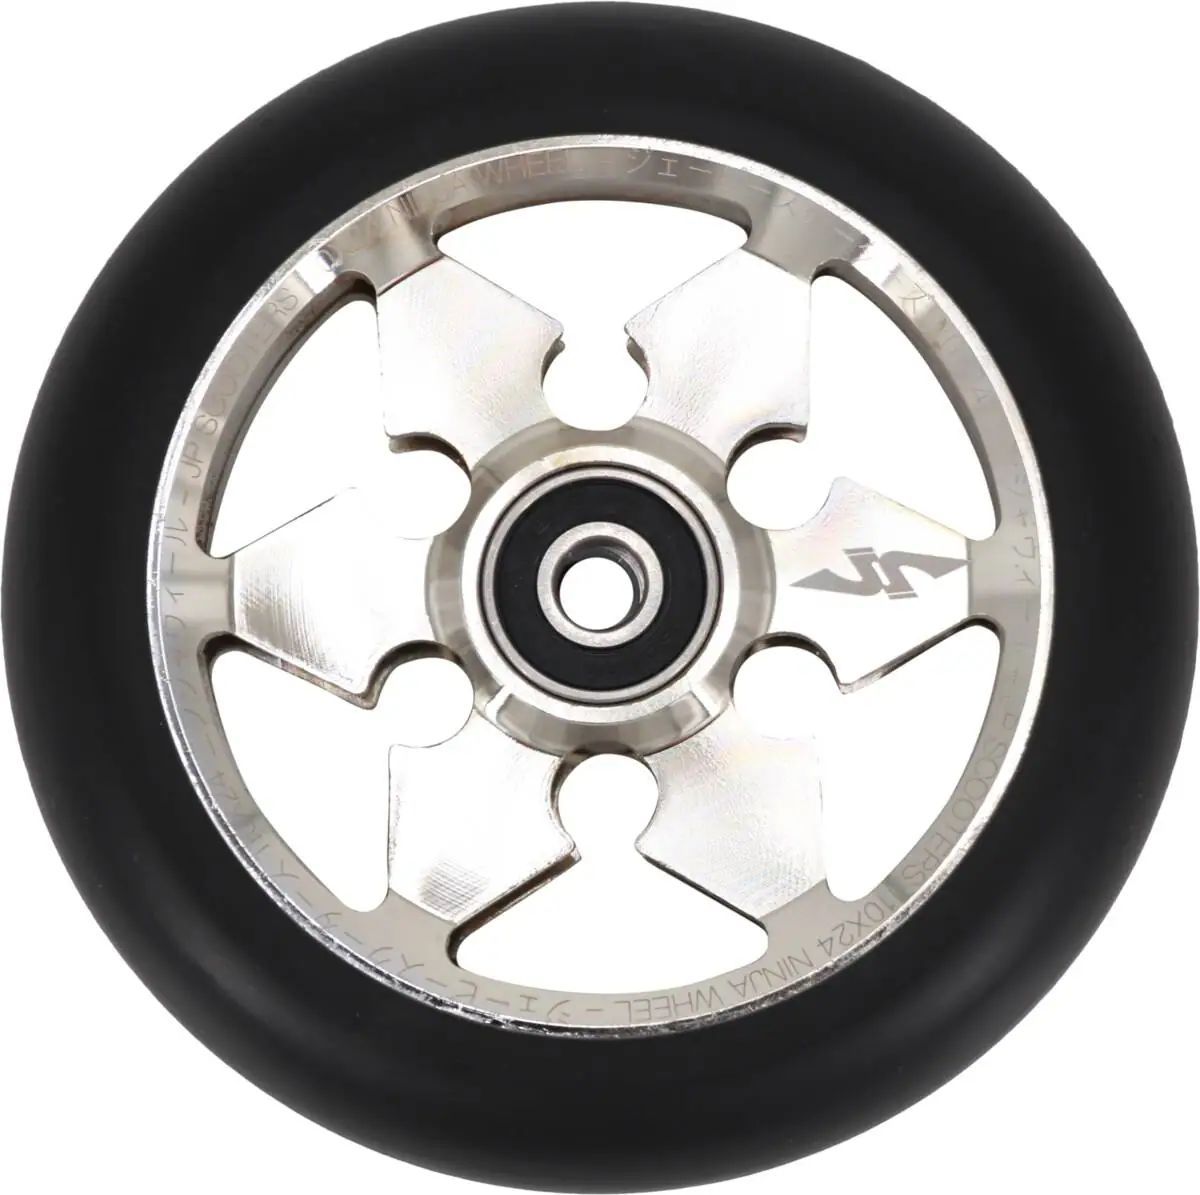 JP Ninja 6-Spoke Sparkcykel Hjul (Silver)